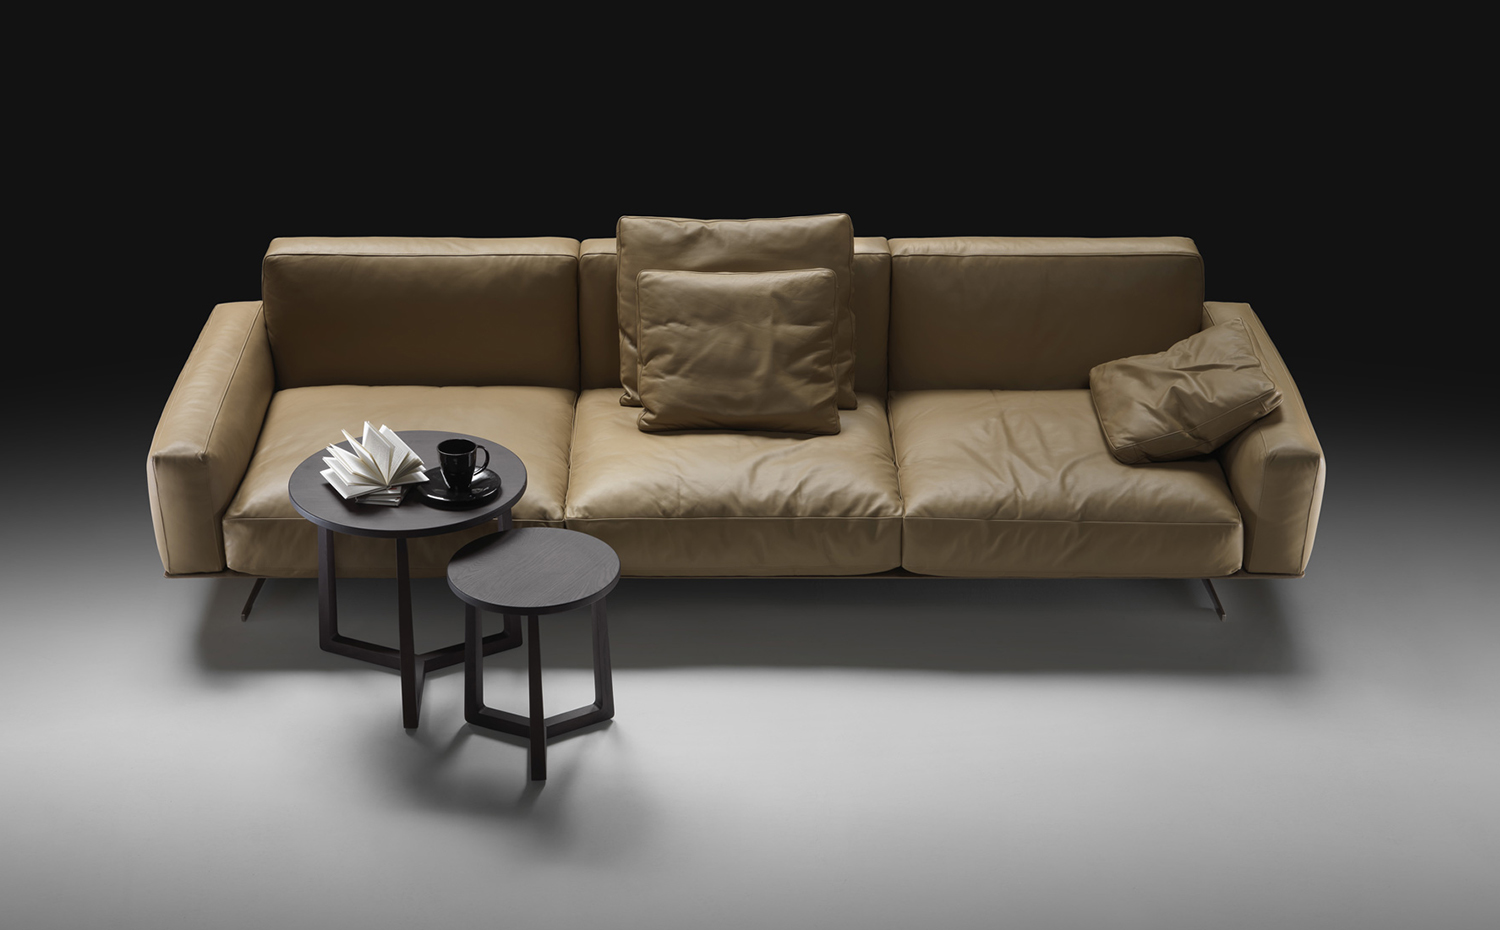 flexform-soft-dream-large-sofa-1 1. [06] Liviano y flexible